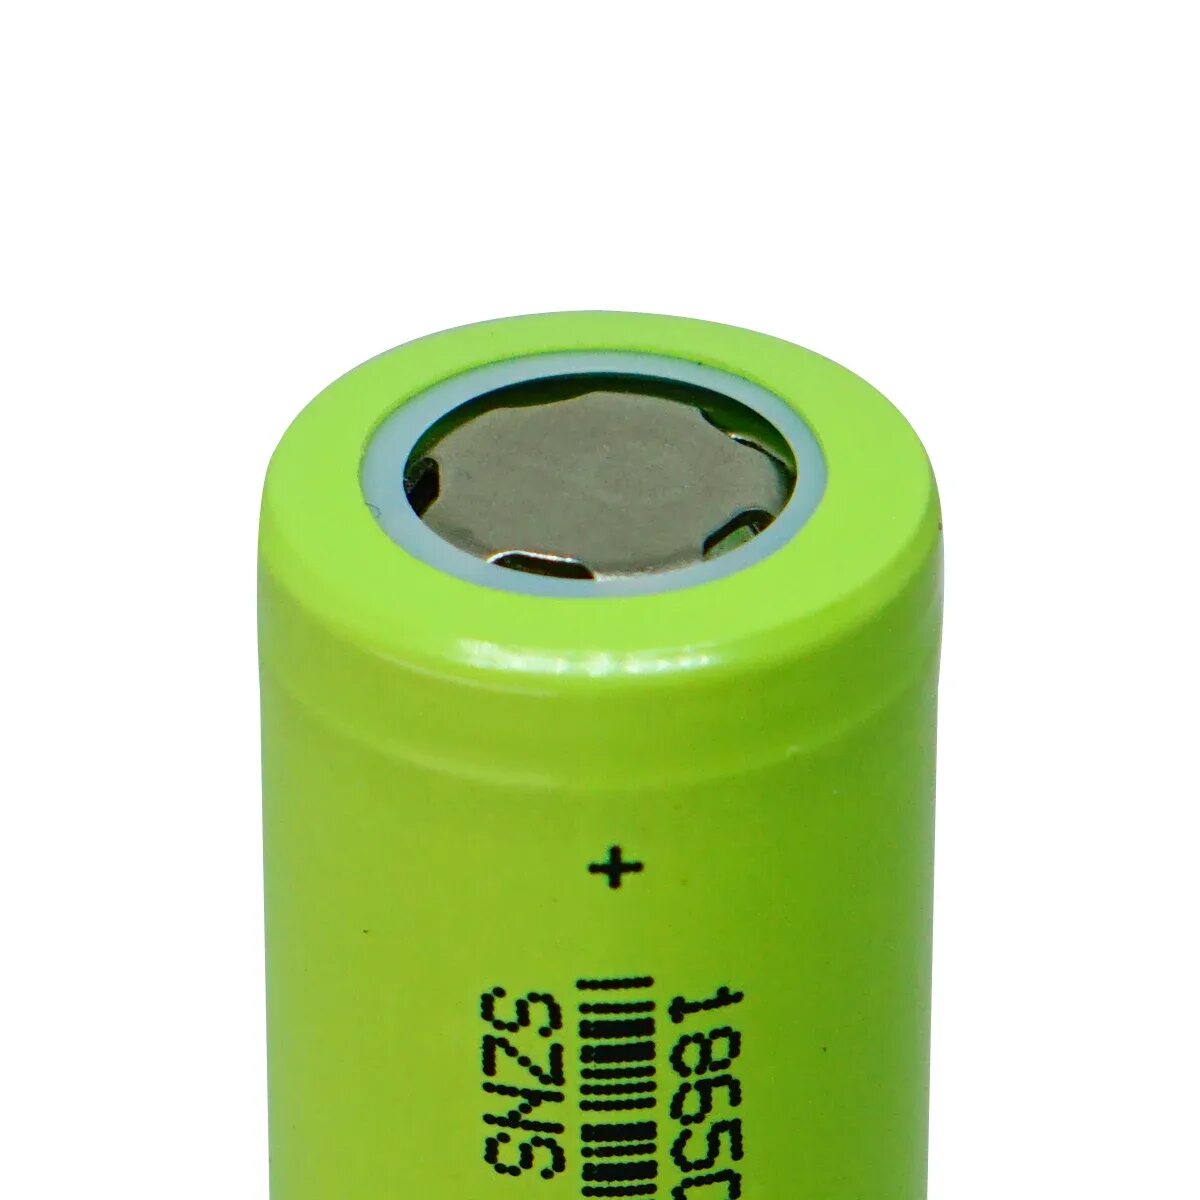 Battery wh. SZNS аккумулятор 18650 9.0WH. Аккумулятор 18650 SZNS 9.0WH 3.6V даташит. JDDL 18650 9.0 WH. SZNS аккумулятор 18650 9.0WH 3.6V характеристики.